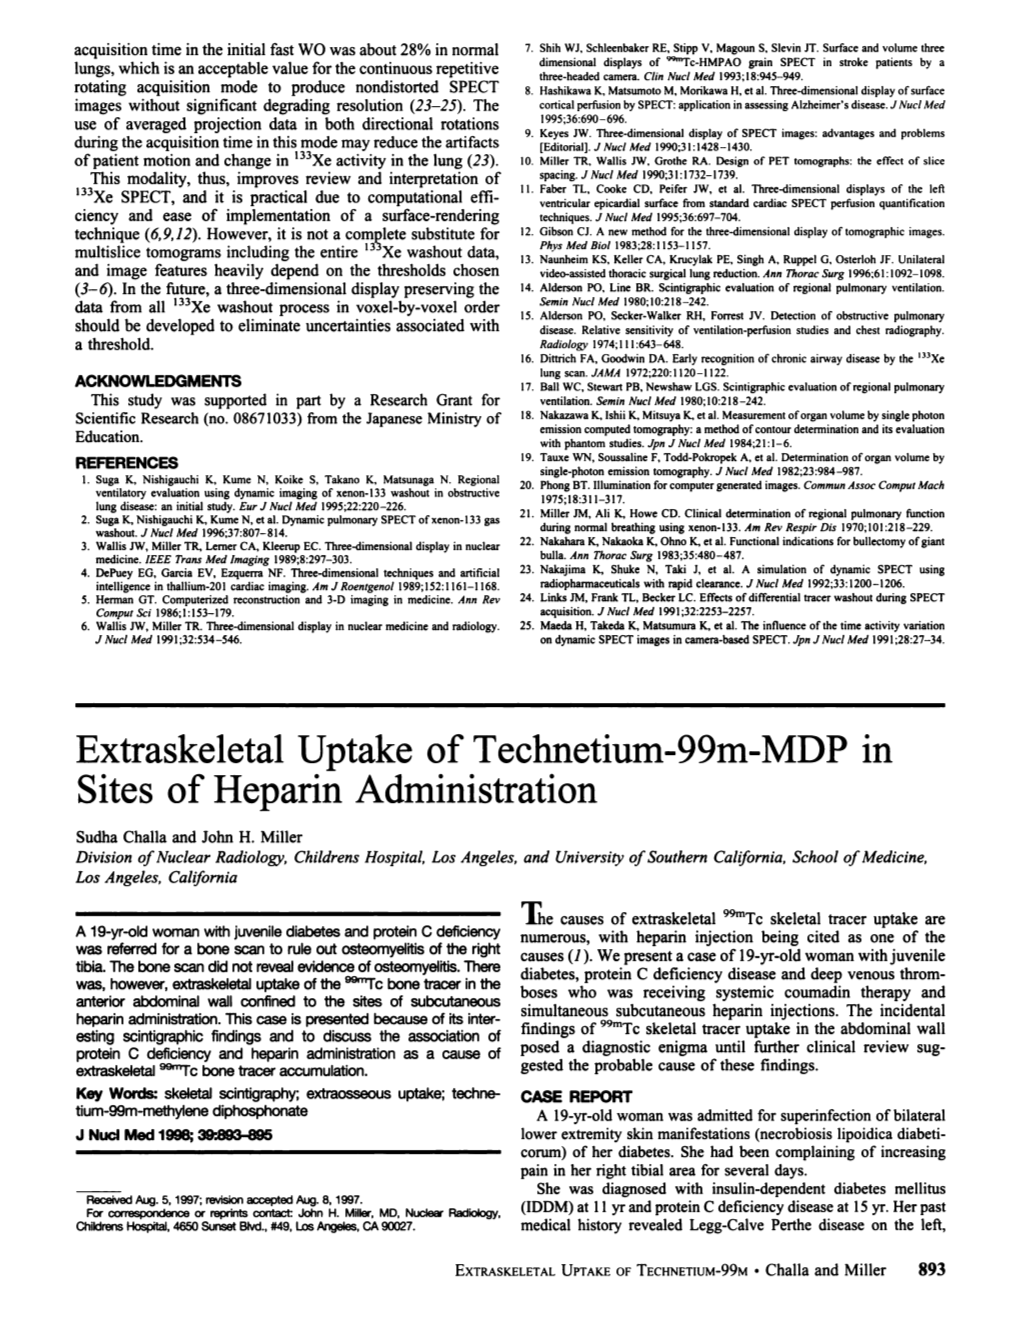 Extraskeletal Uptake of Technetium-99M-MDP in Sites of Heparin Administration